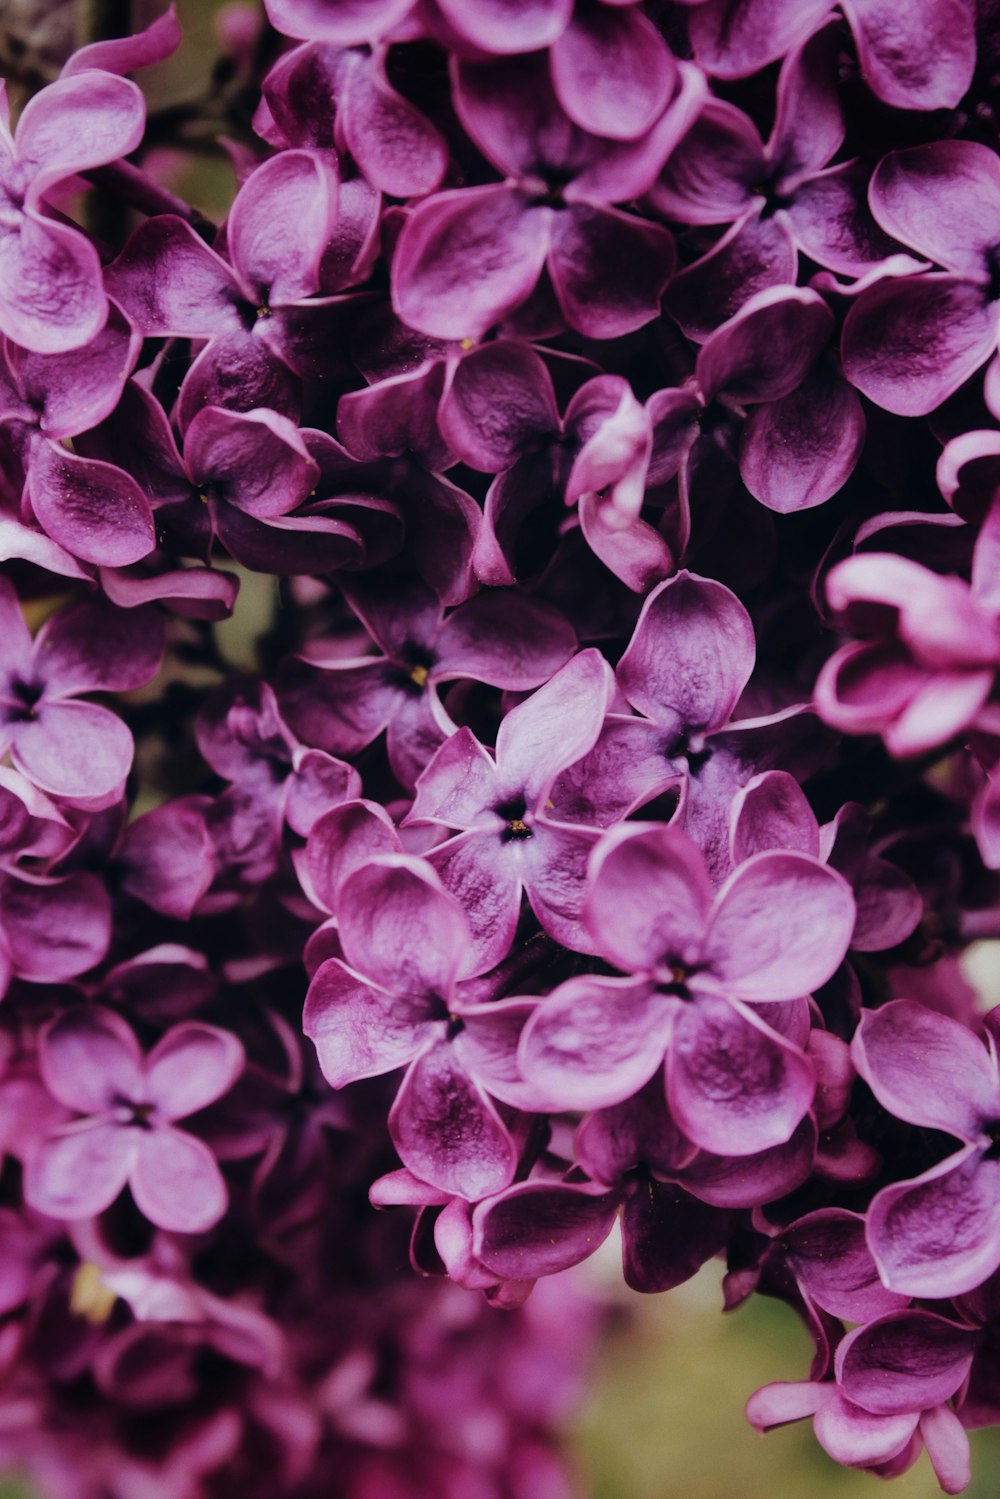 purple flowers in macro shot